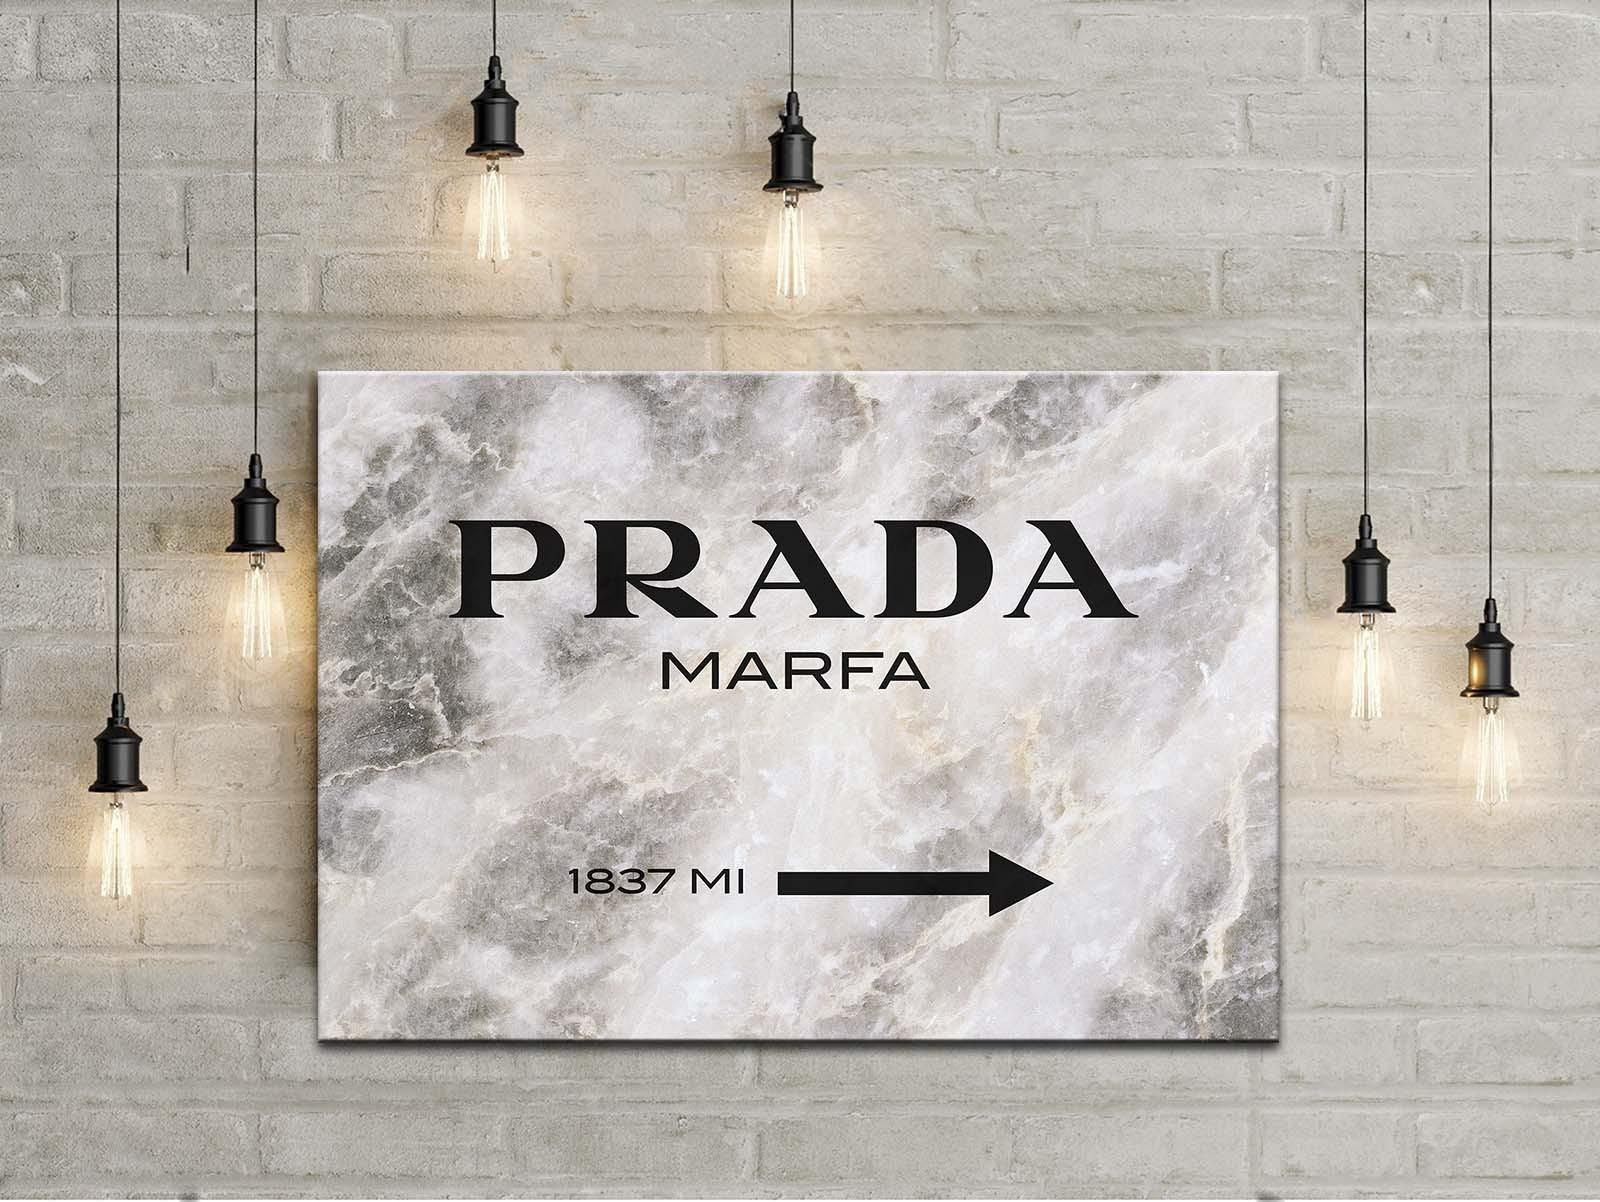 Prada Marfa Gossip Girl Sign, Painting Canvas Art, Wall Art, Home Intended For Prada Marfa Wall Art (Photo 19 of 20)